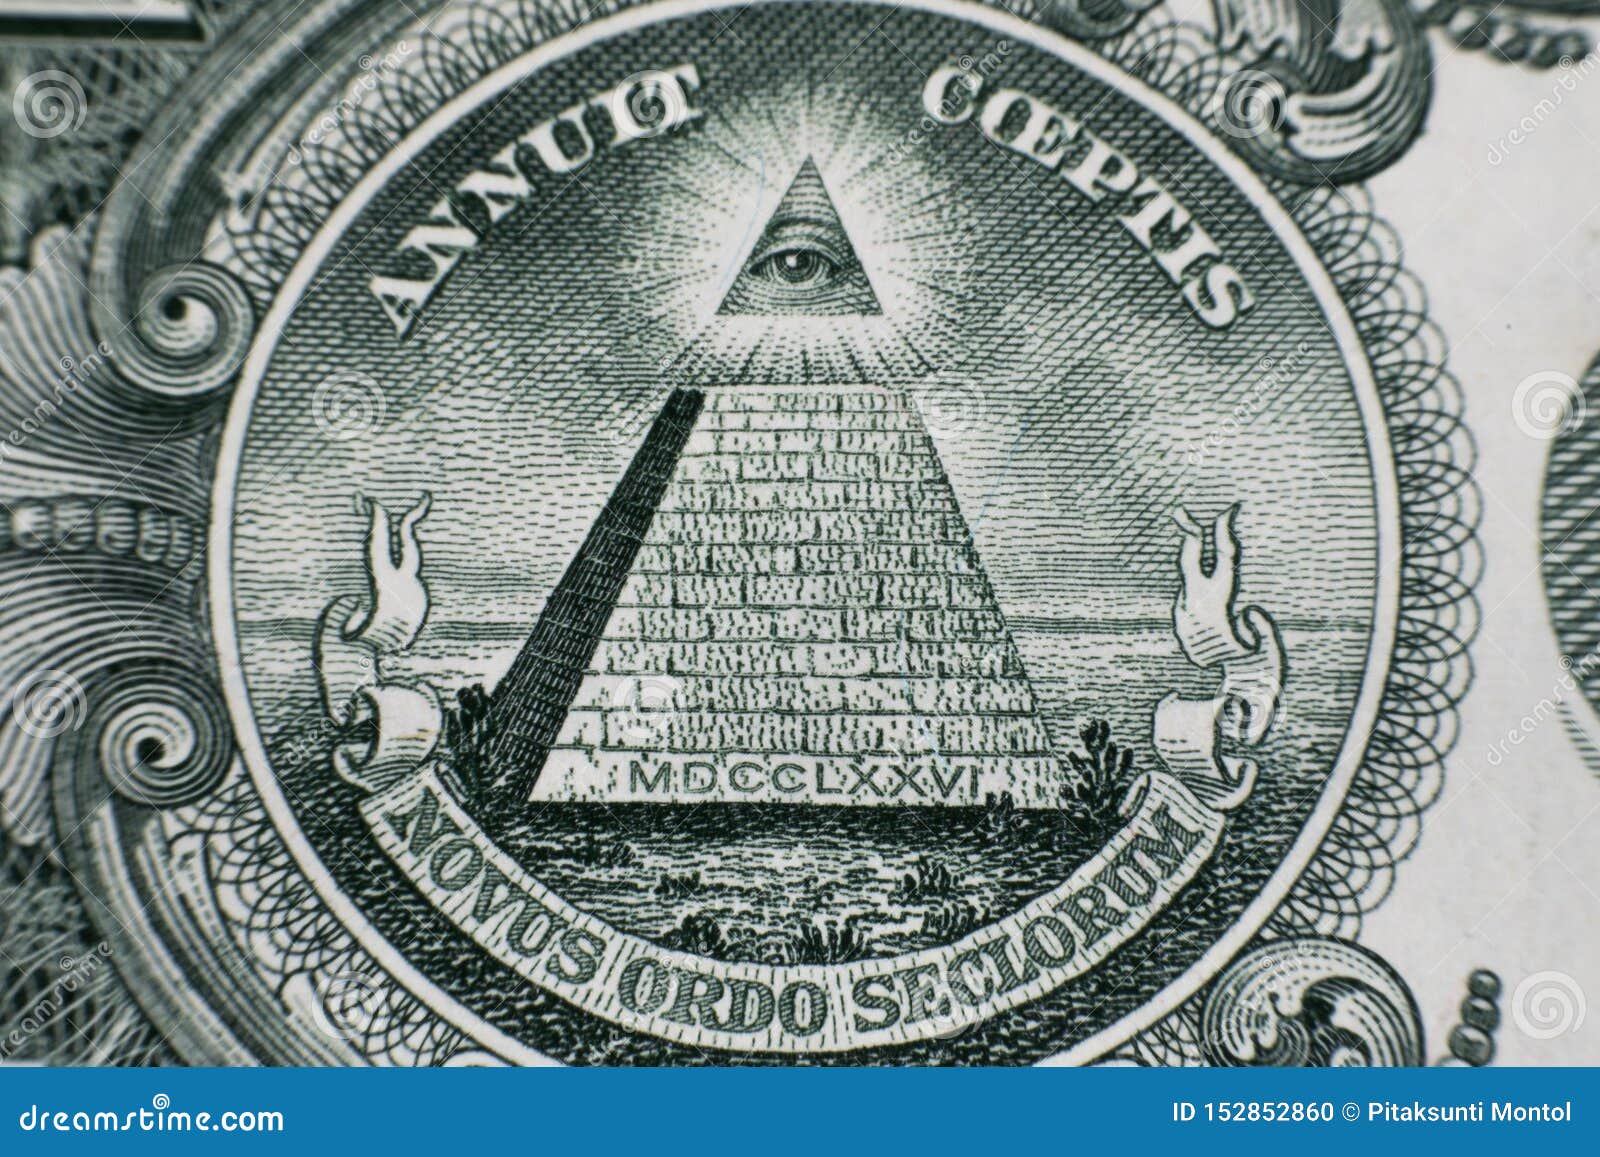 Macro Close Up of the US 1 Dollar Bill Stock Photo - Image of